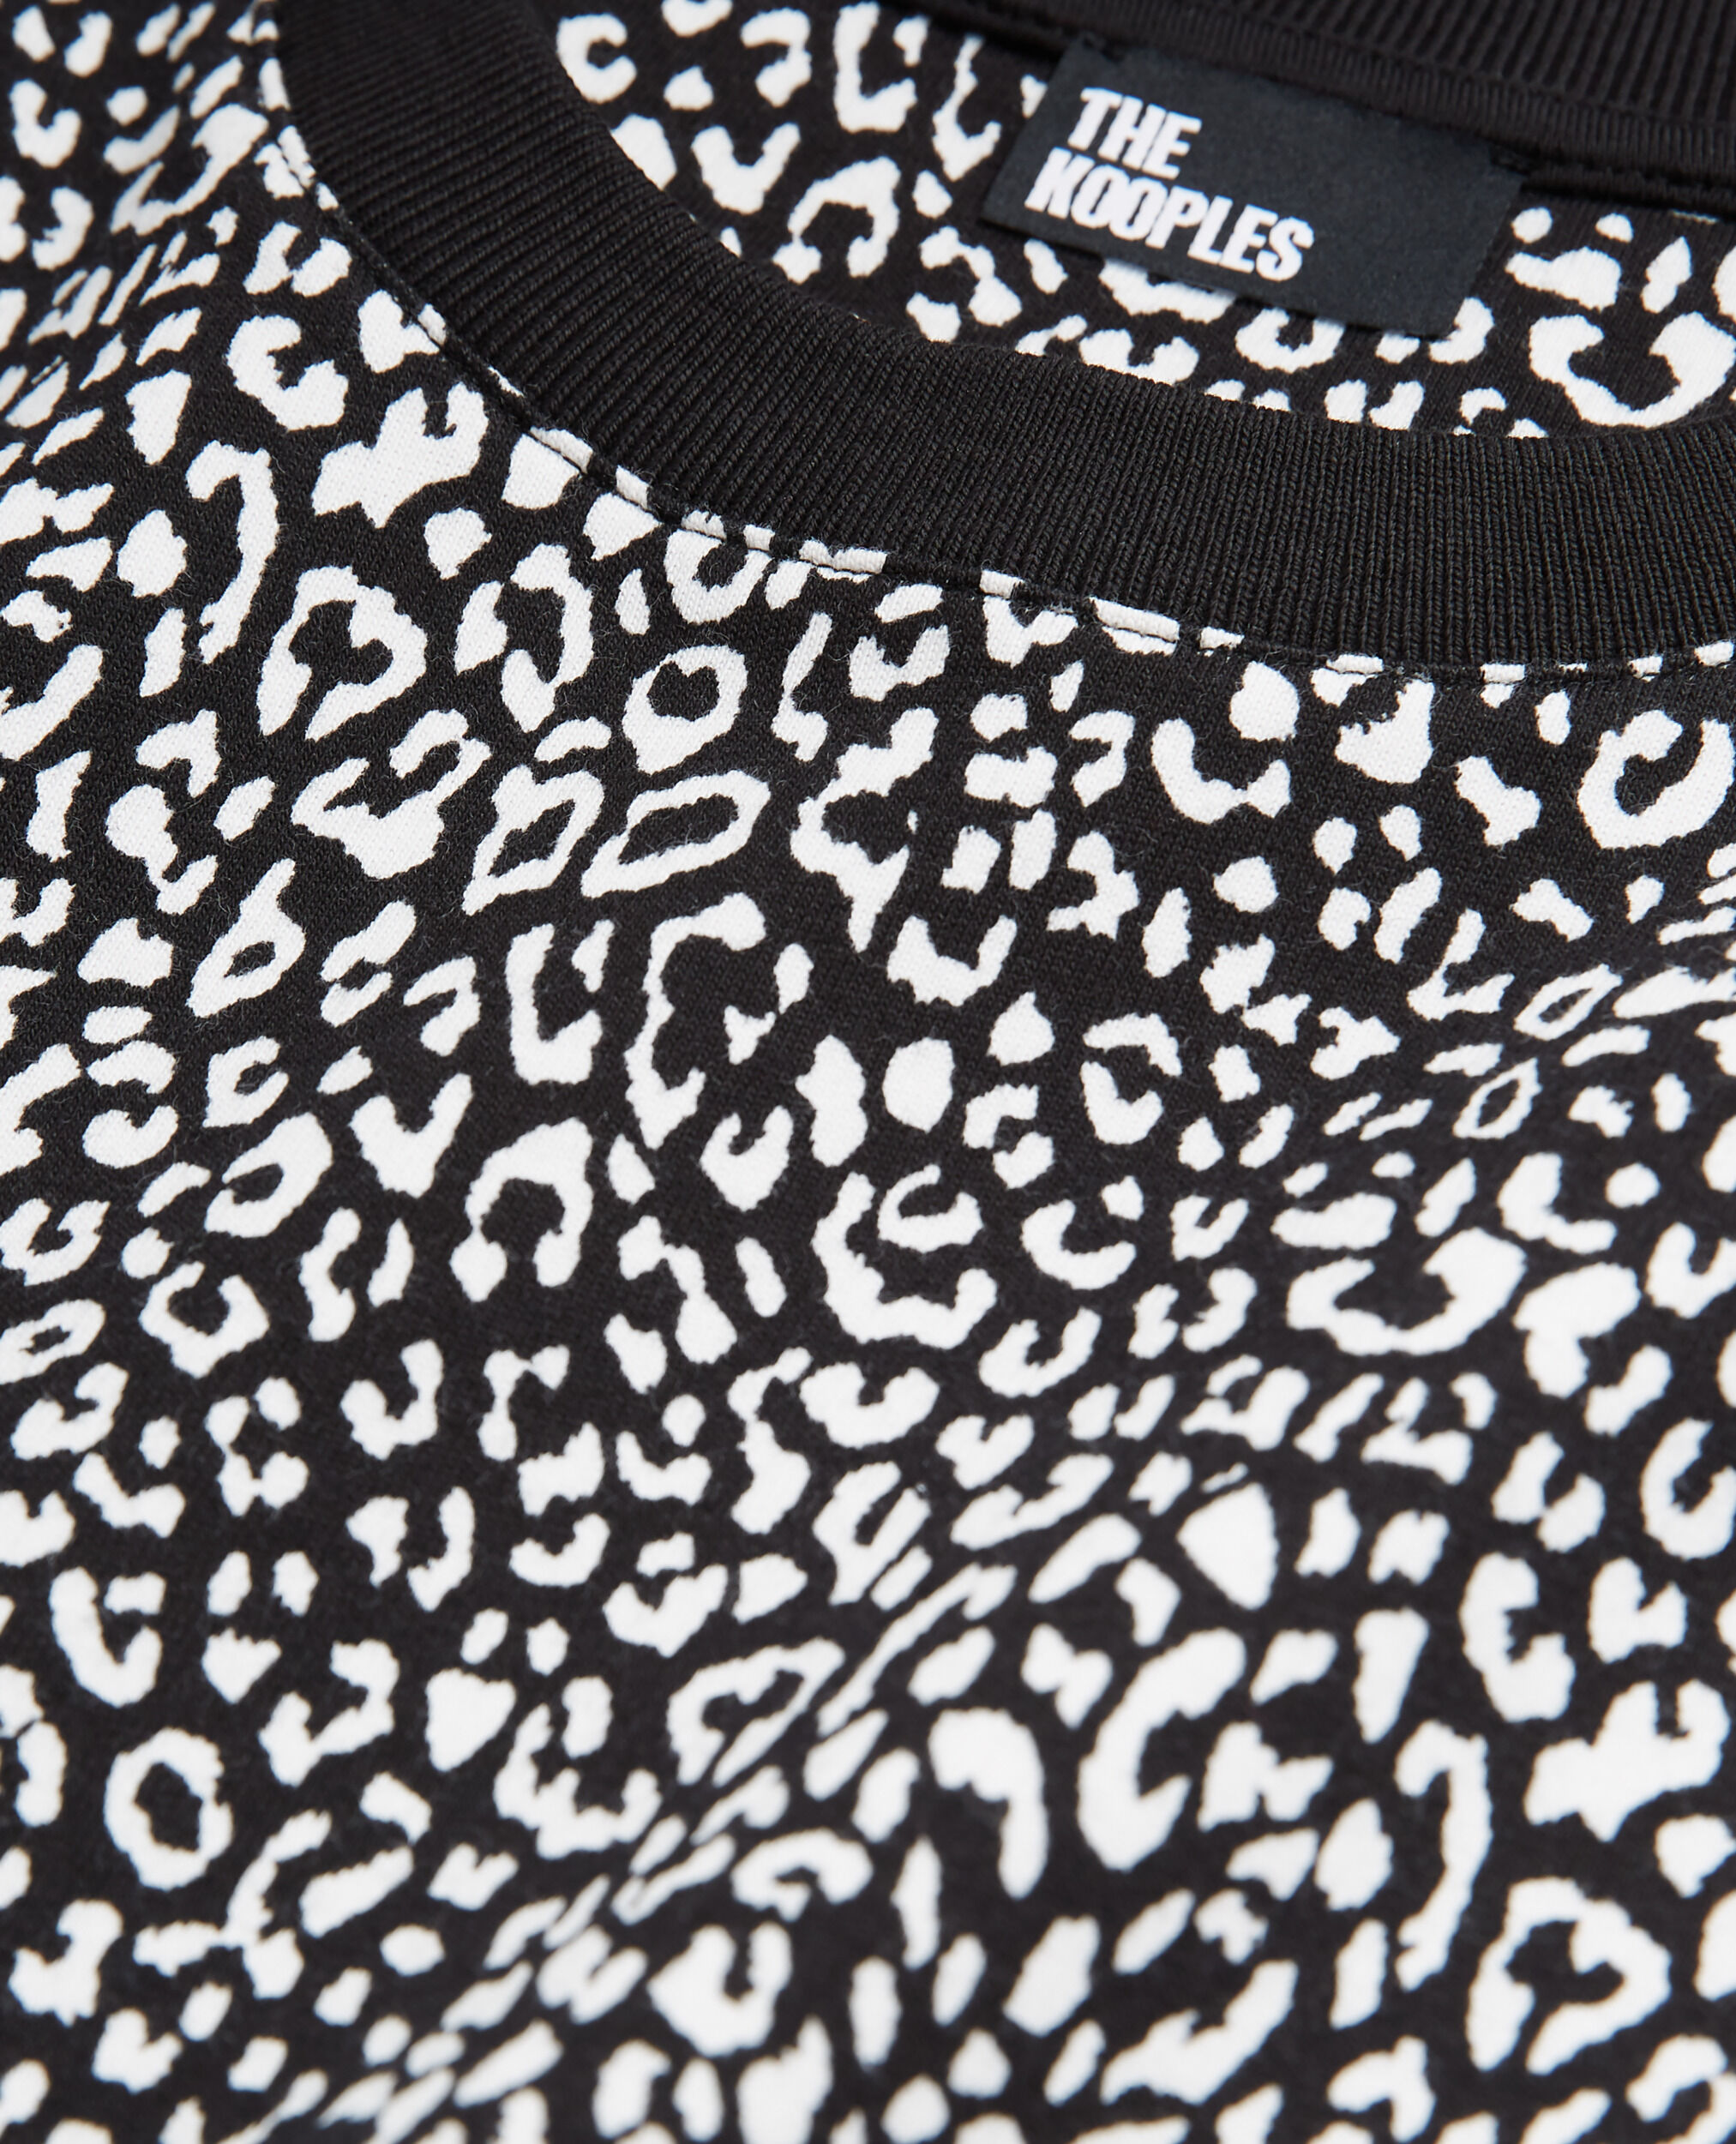 Black leopard-print t-shirt, ECRU, hi-res image number null